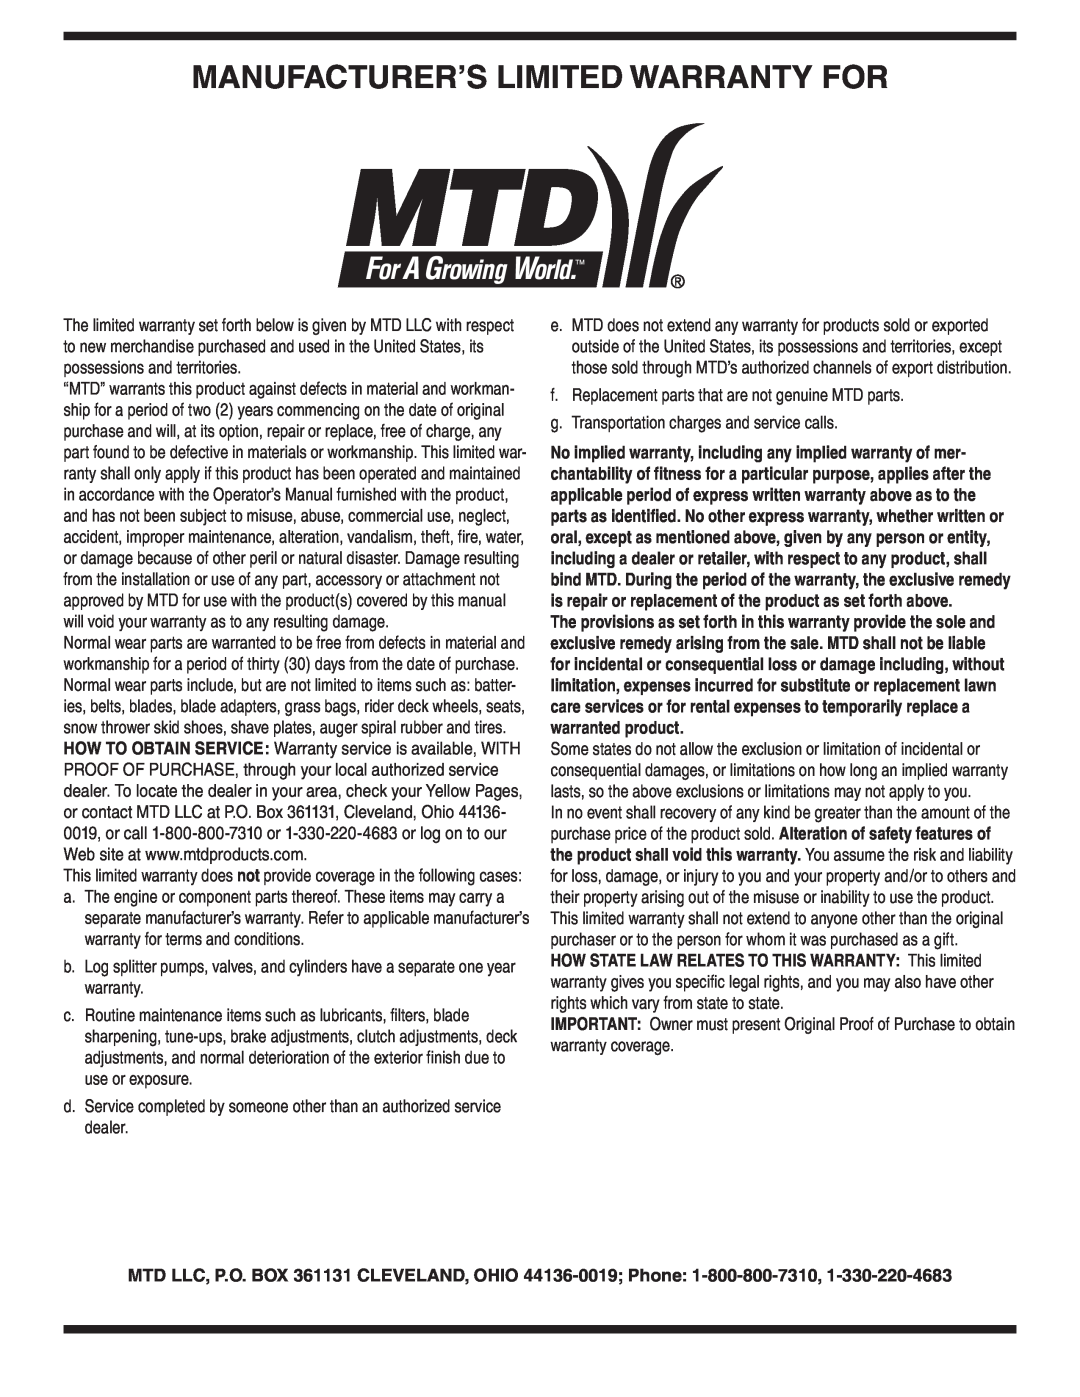 MTD OHD 190-180 warranty Manufacturer’S Limited Warranty For 